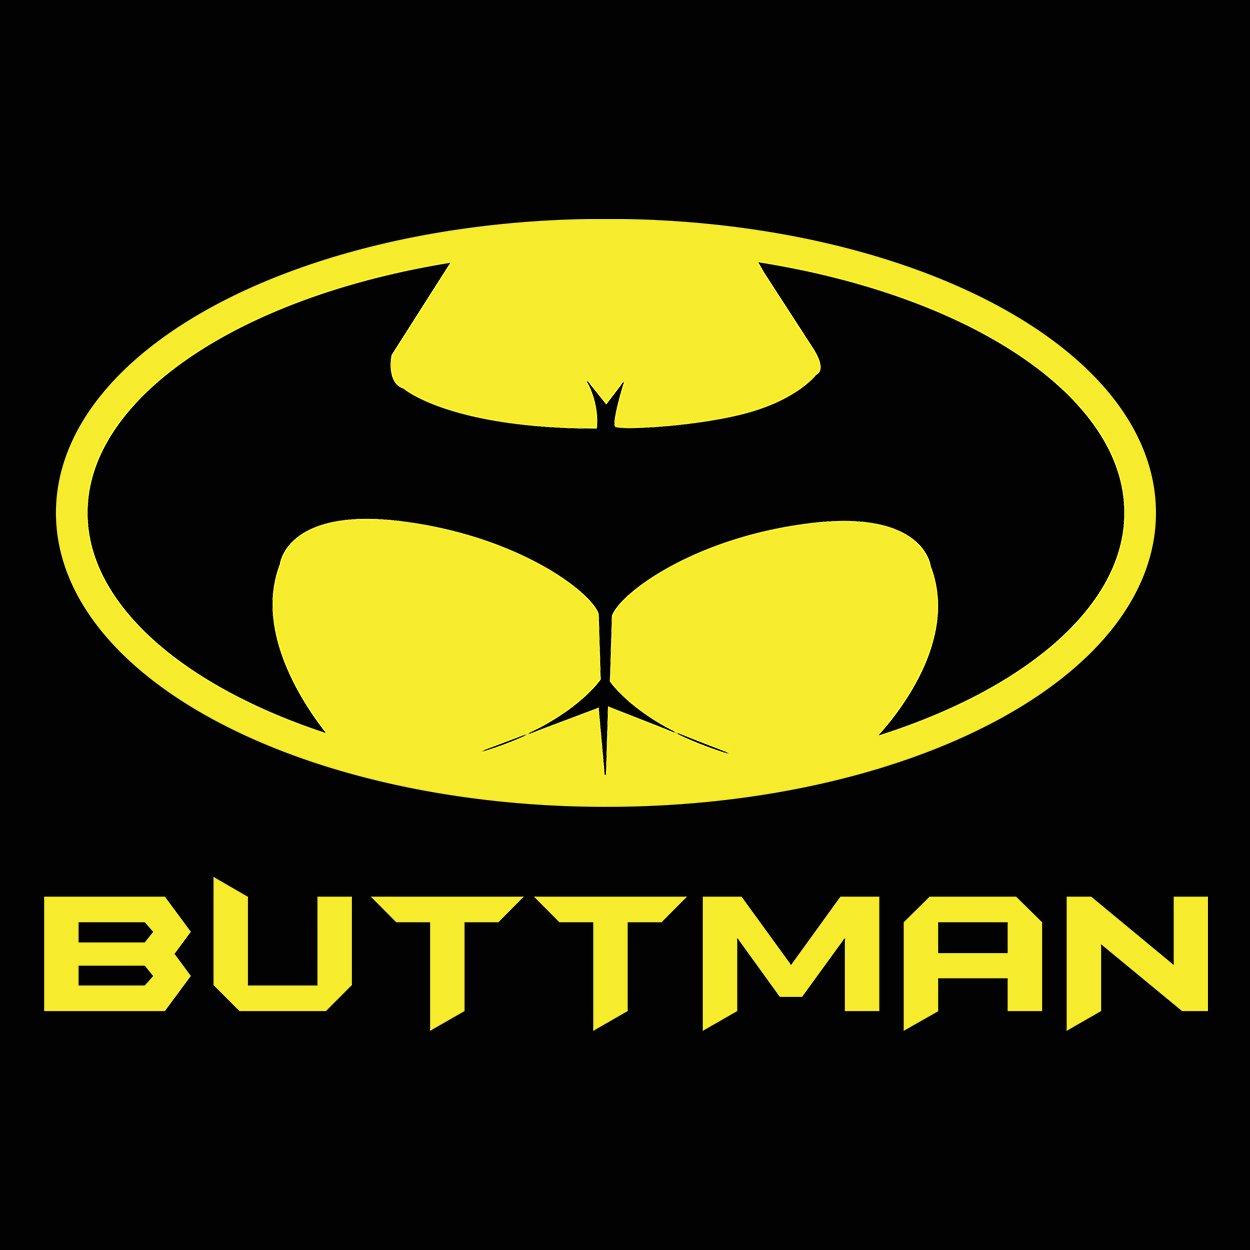 Buttman. Funny, Funny design, Funny shirts